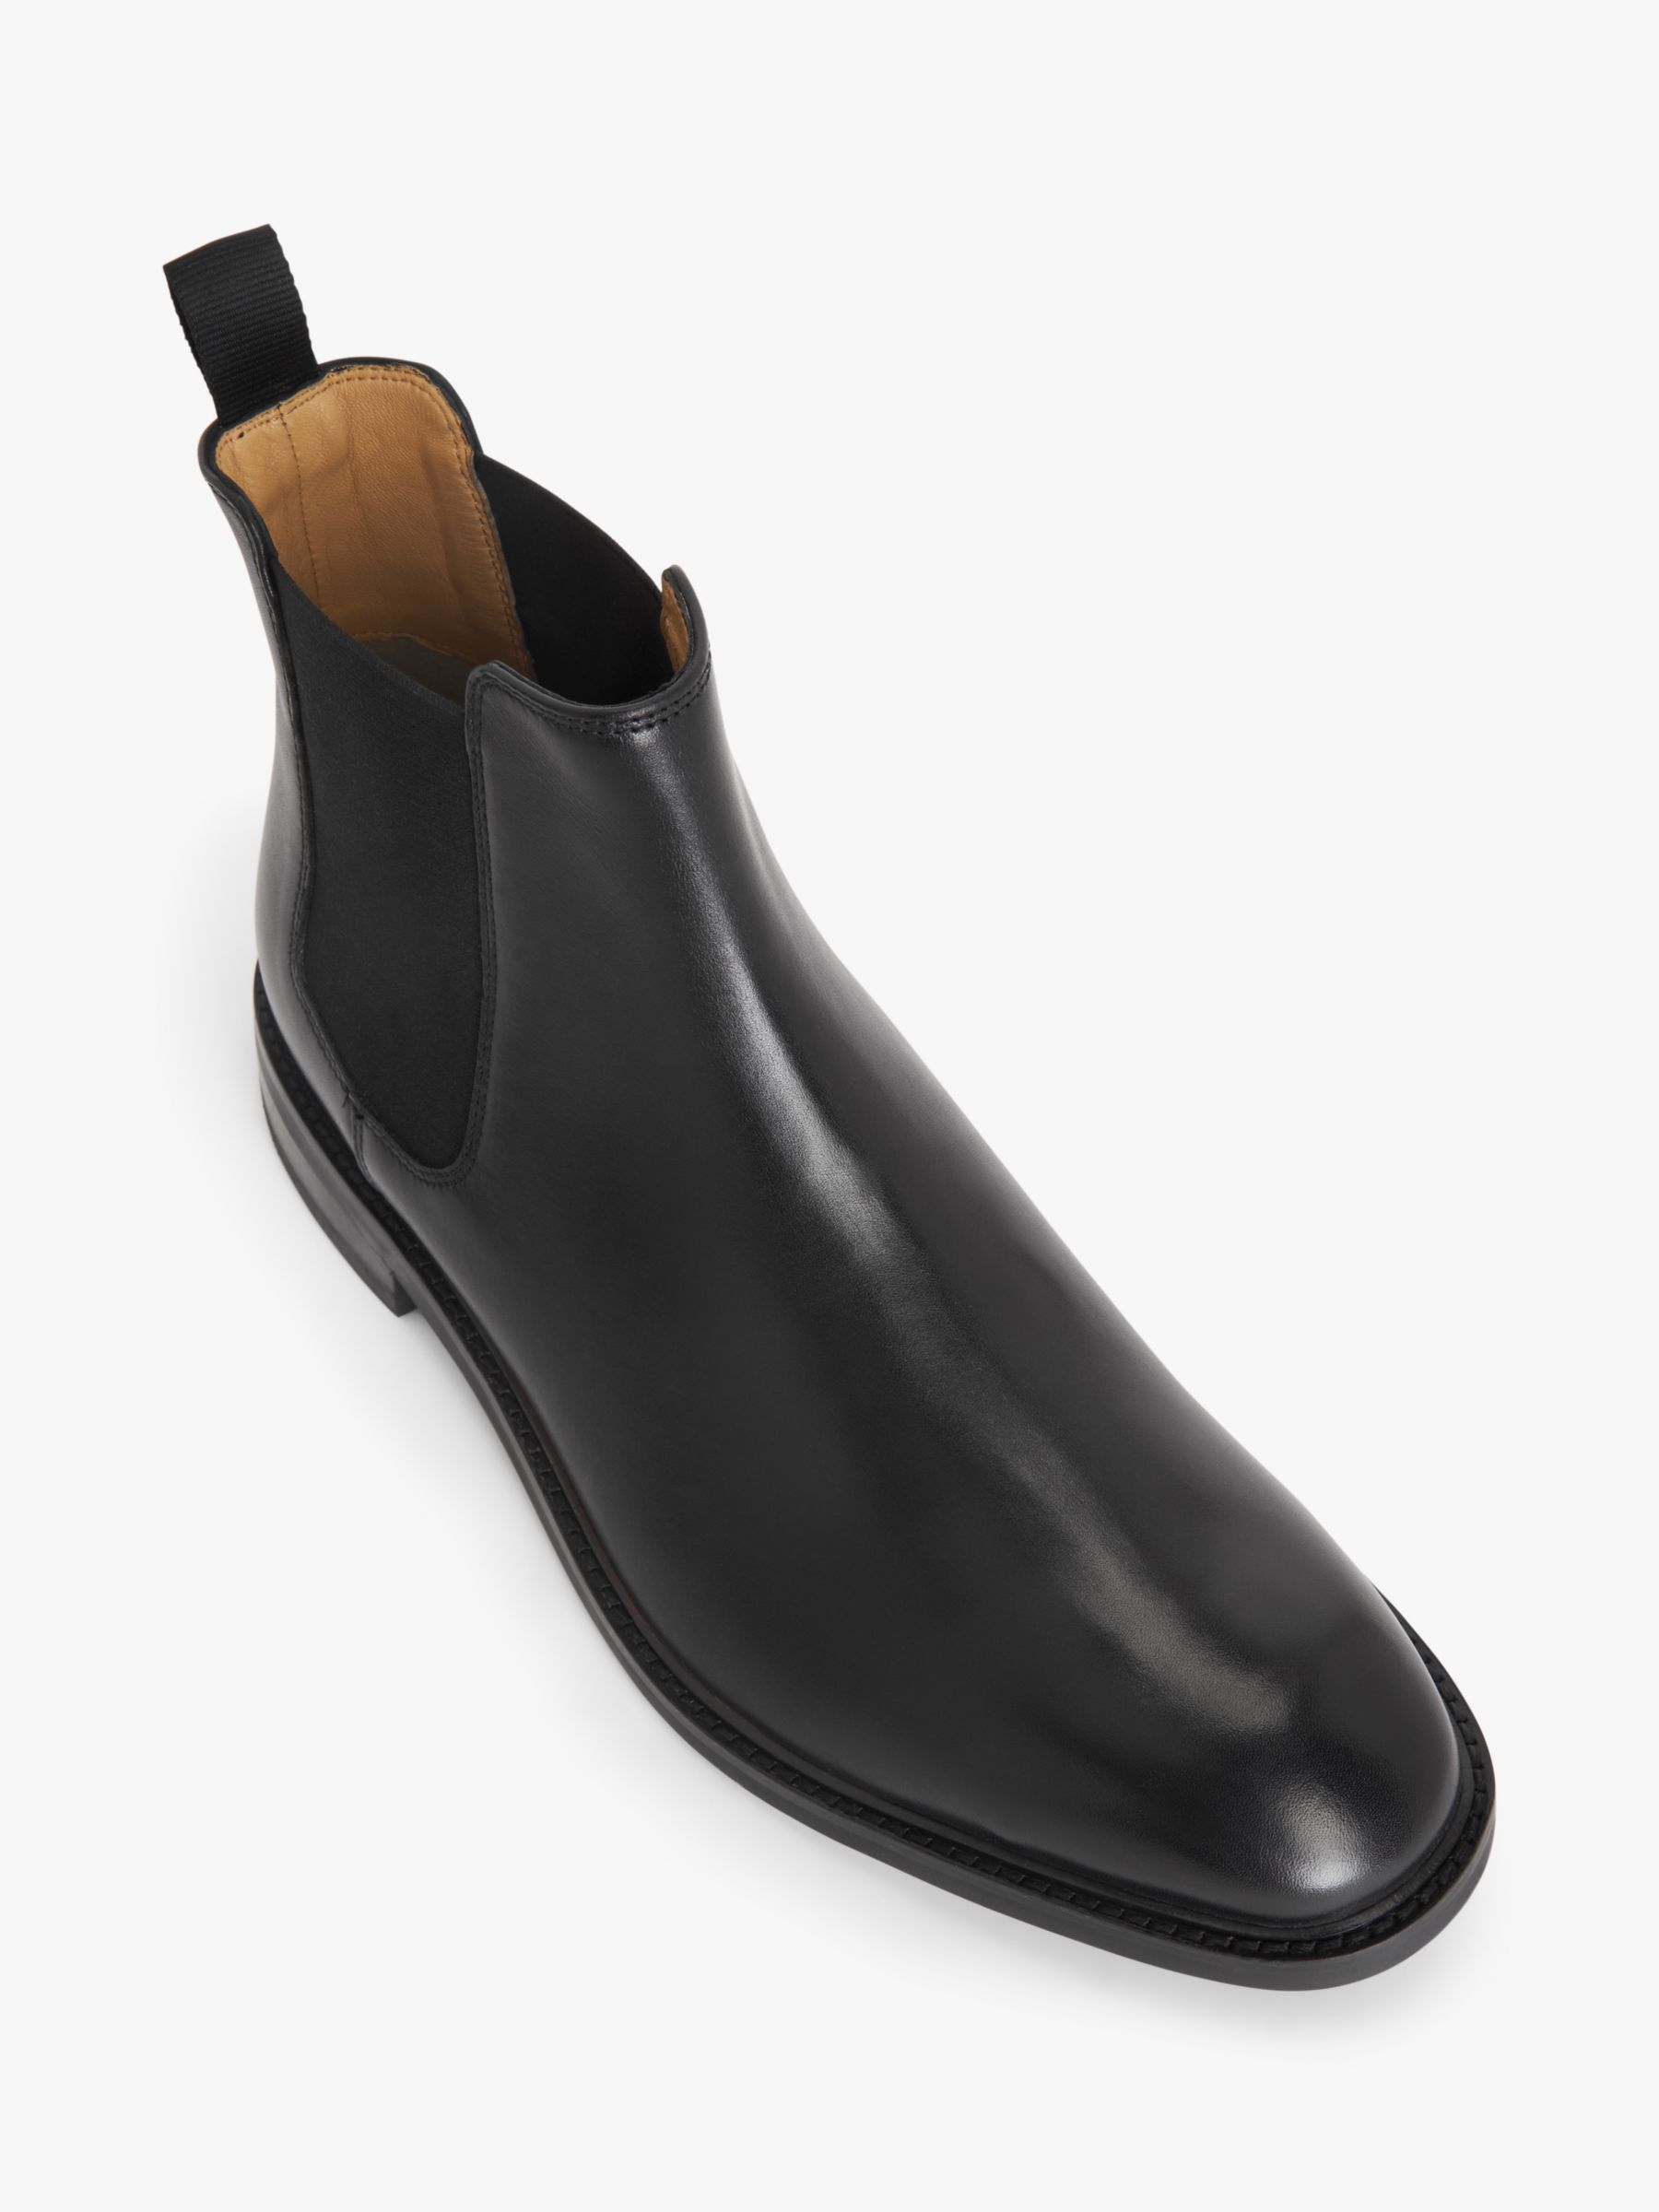 John Lewis Formal Leather Chelsea Boots, Black, 9